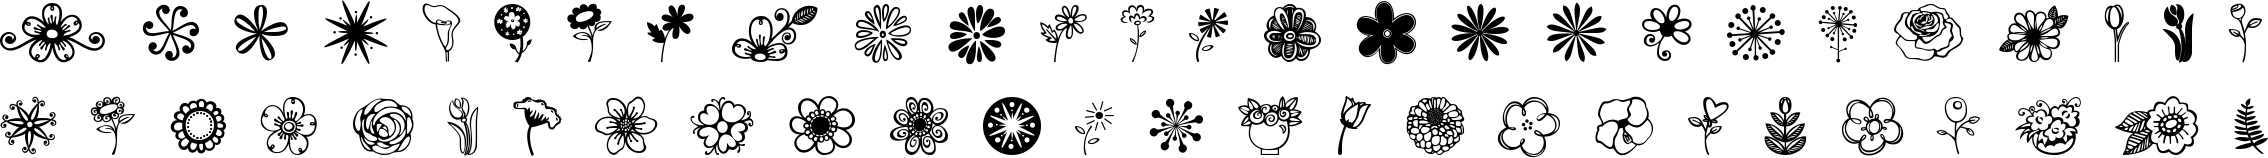 Janda Flower Doodles Character Map